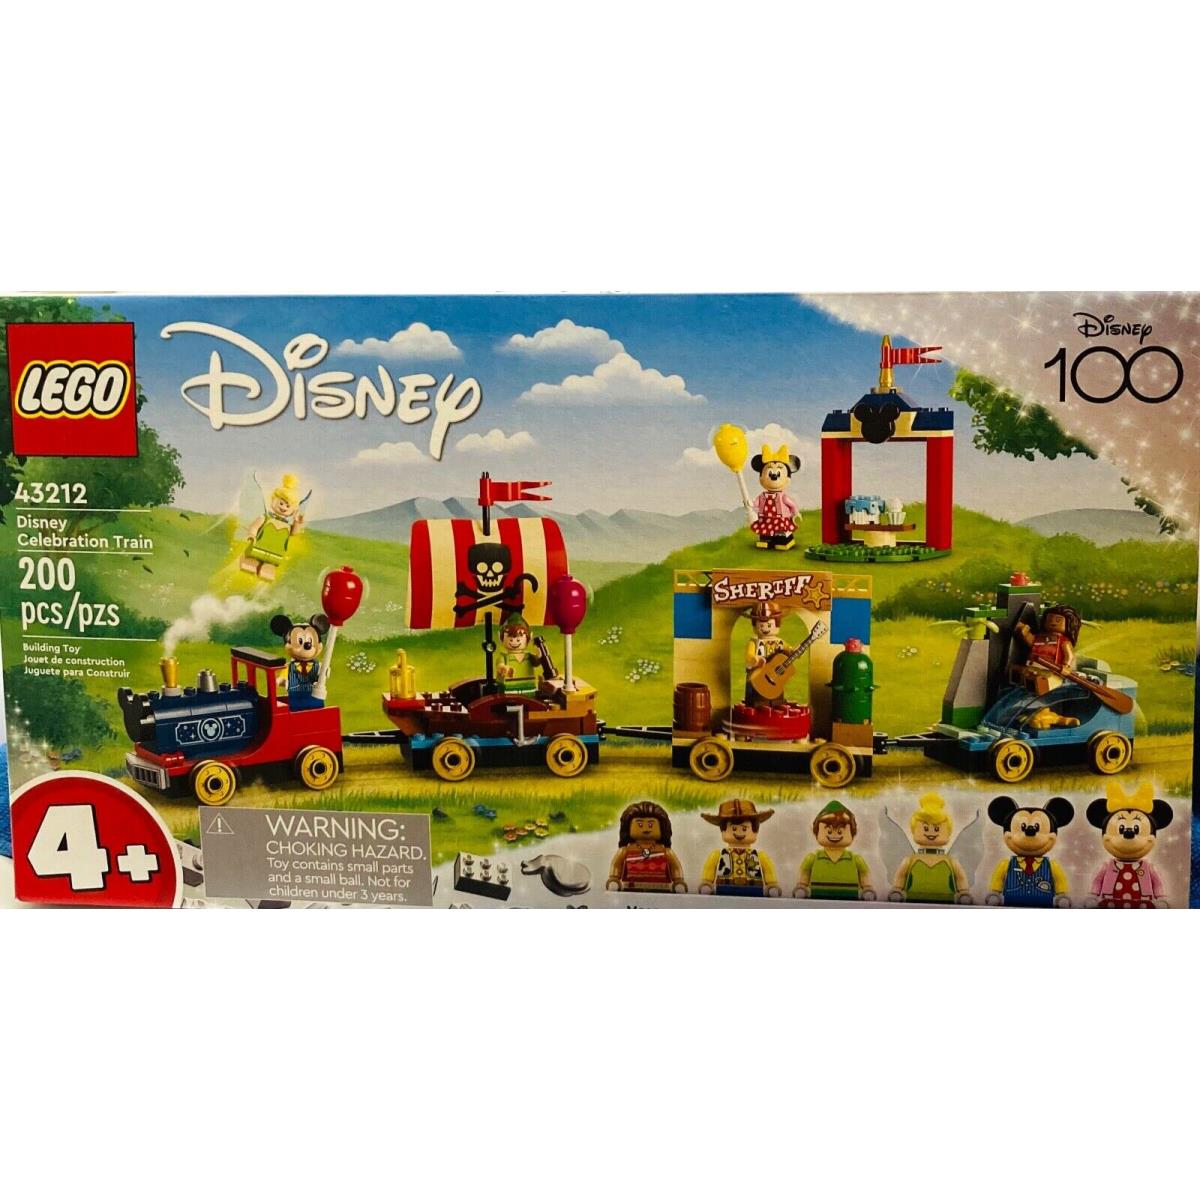 Lego Brickheadz Disney 100 Celebration Train 43212 501 Pcs Building Kit Toy Set